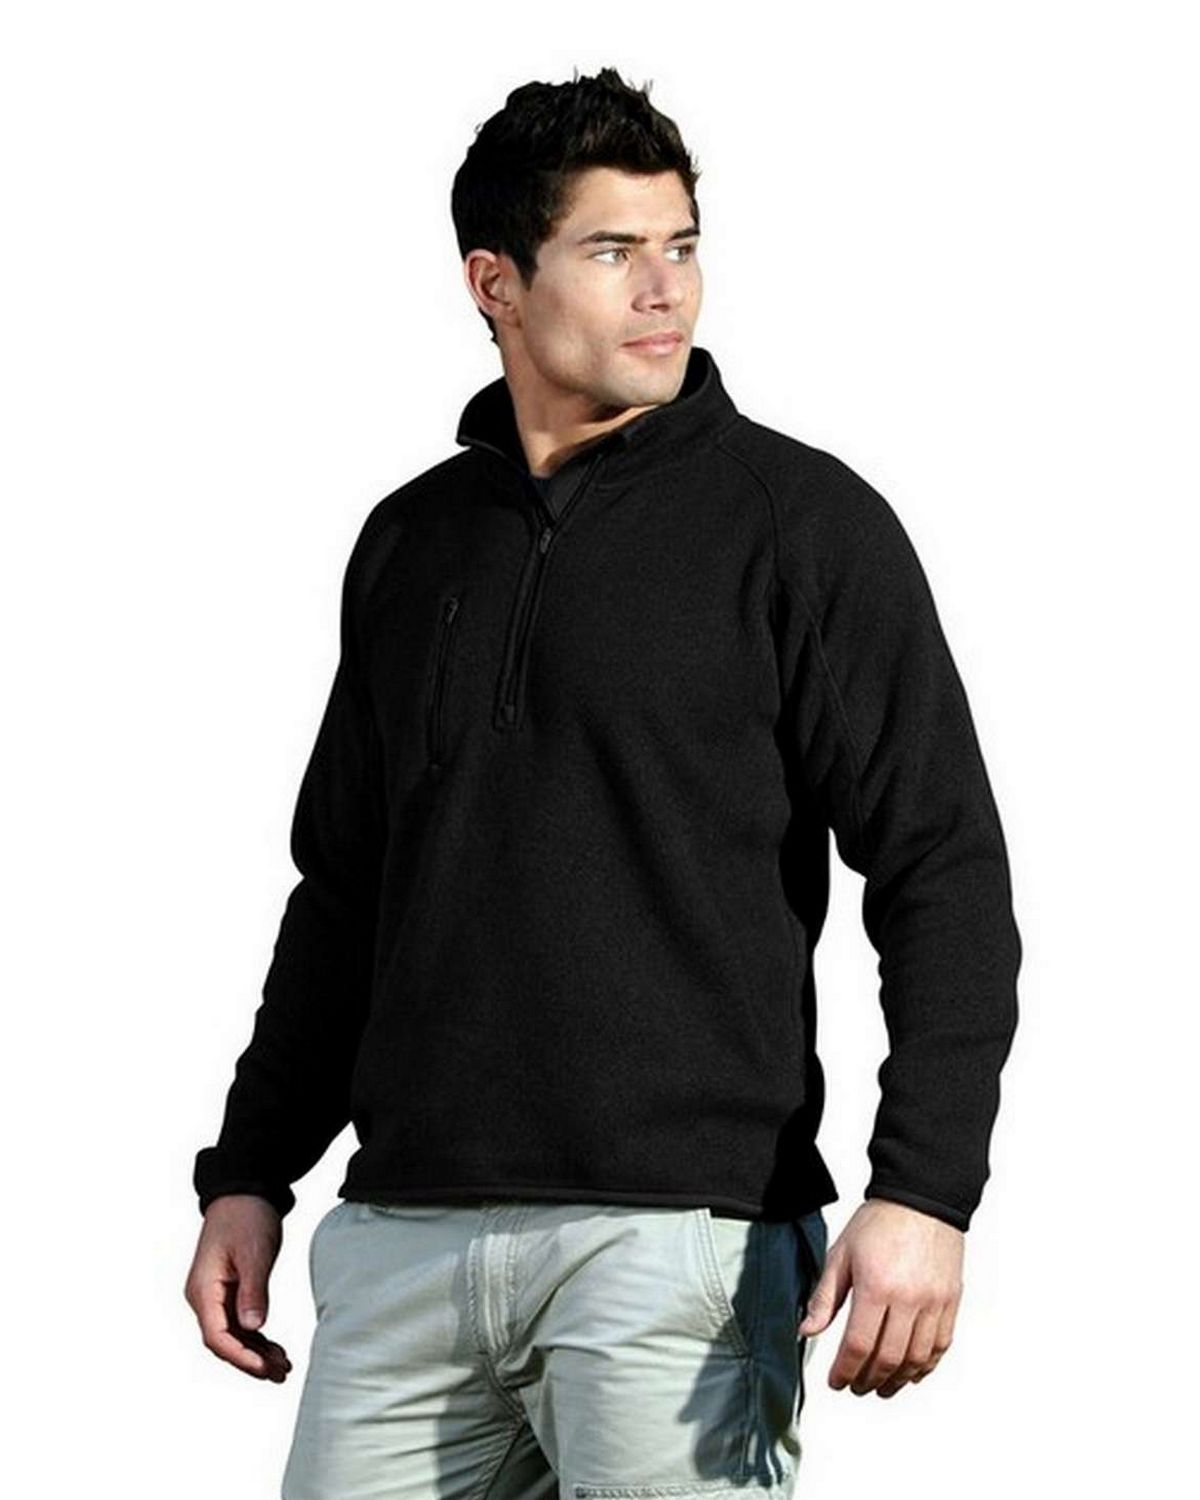 Buy Tri-Mountain 935 Men's 100% Polyester 1/4 Zip Sweater Knit LS ...